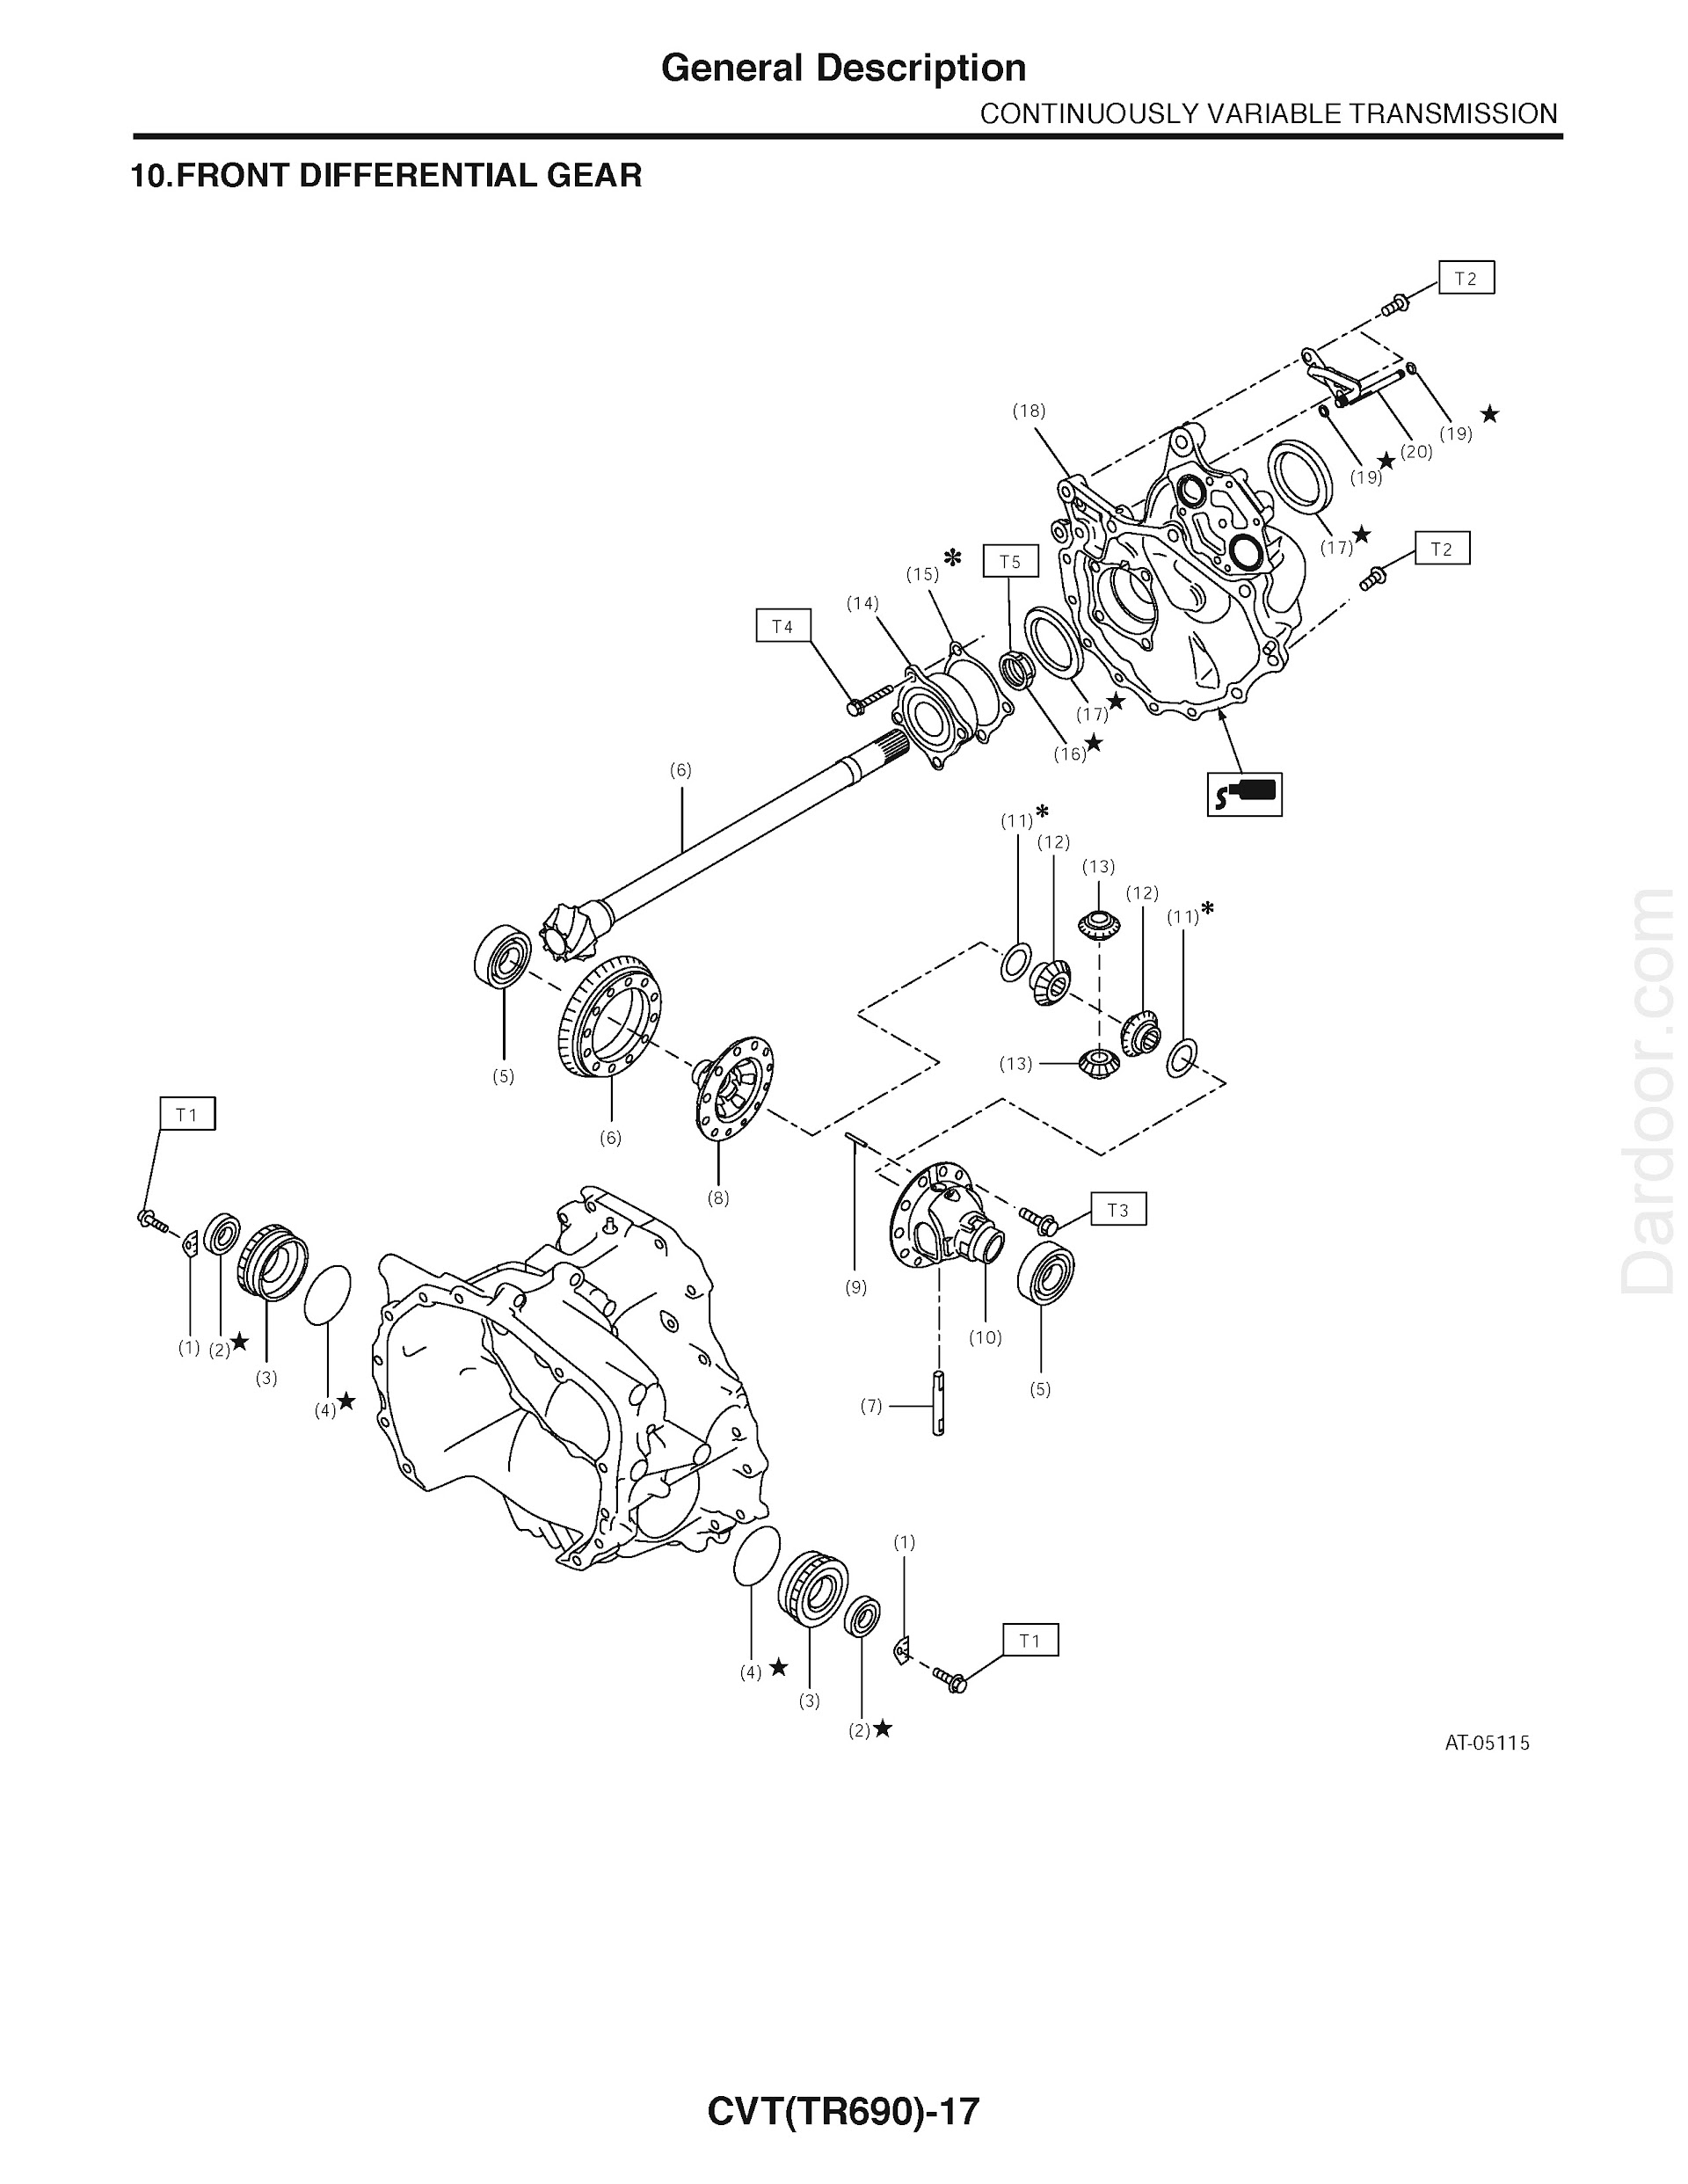 2017 Subaru WRX and WRX STI Repair Manual, Front Differential Gear